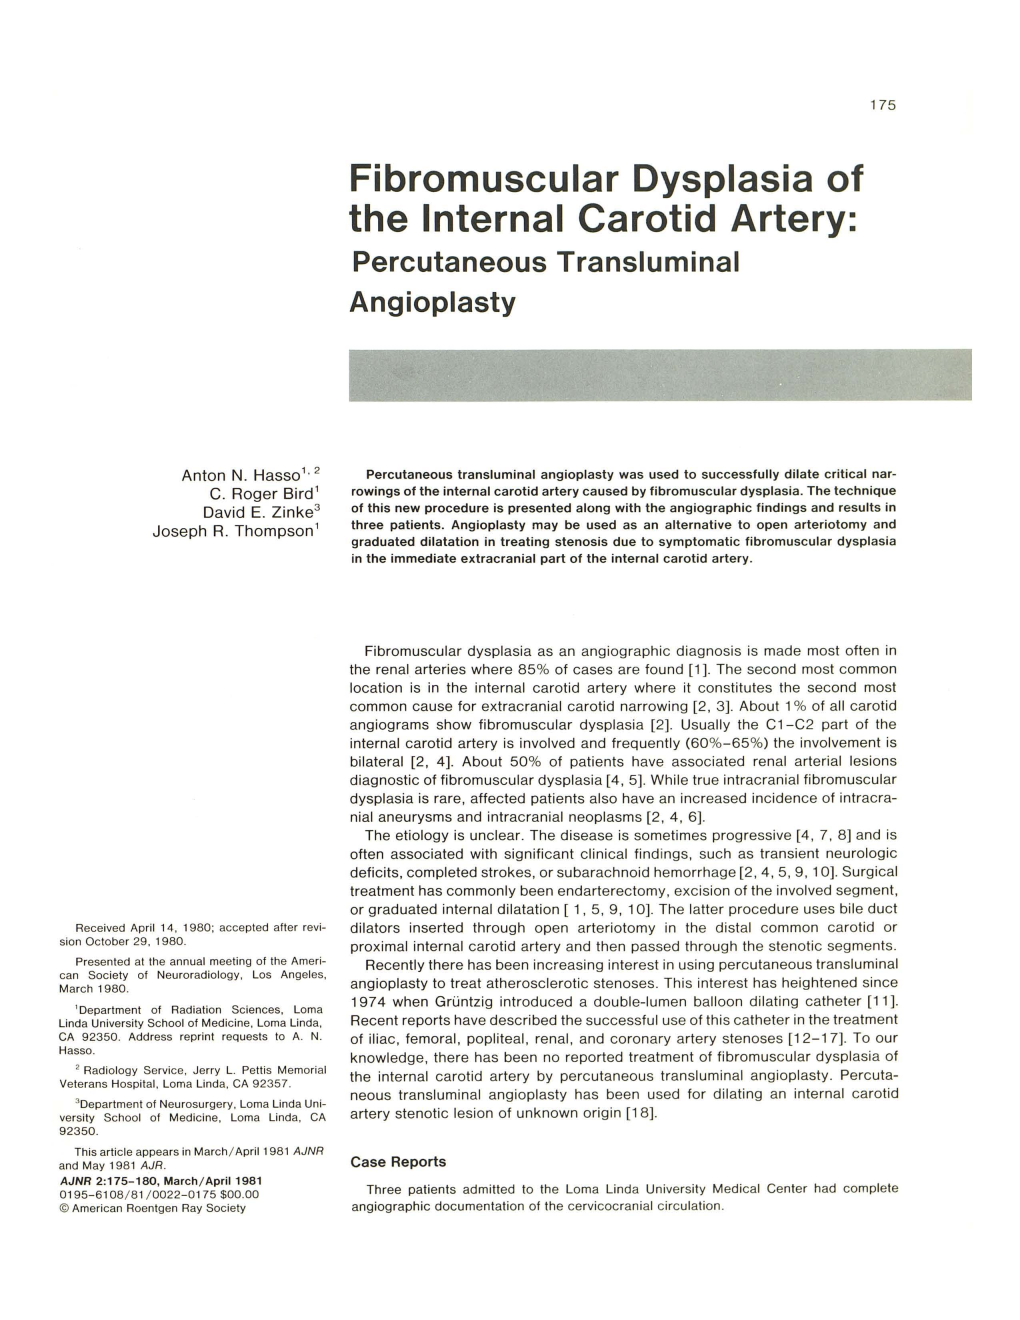 Fibromuscular Dysplasia of the Internal Carotid Artery: Percutaneous Transluminal Angioplasty